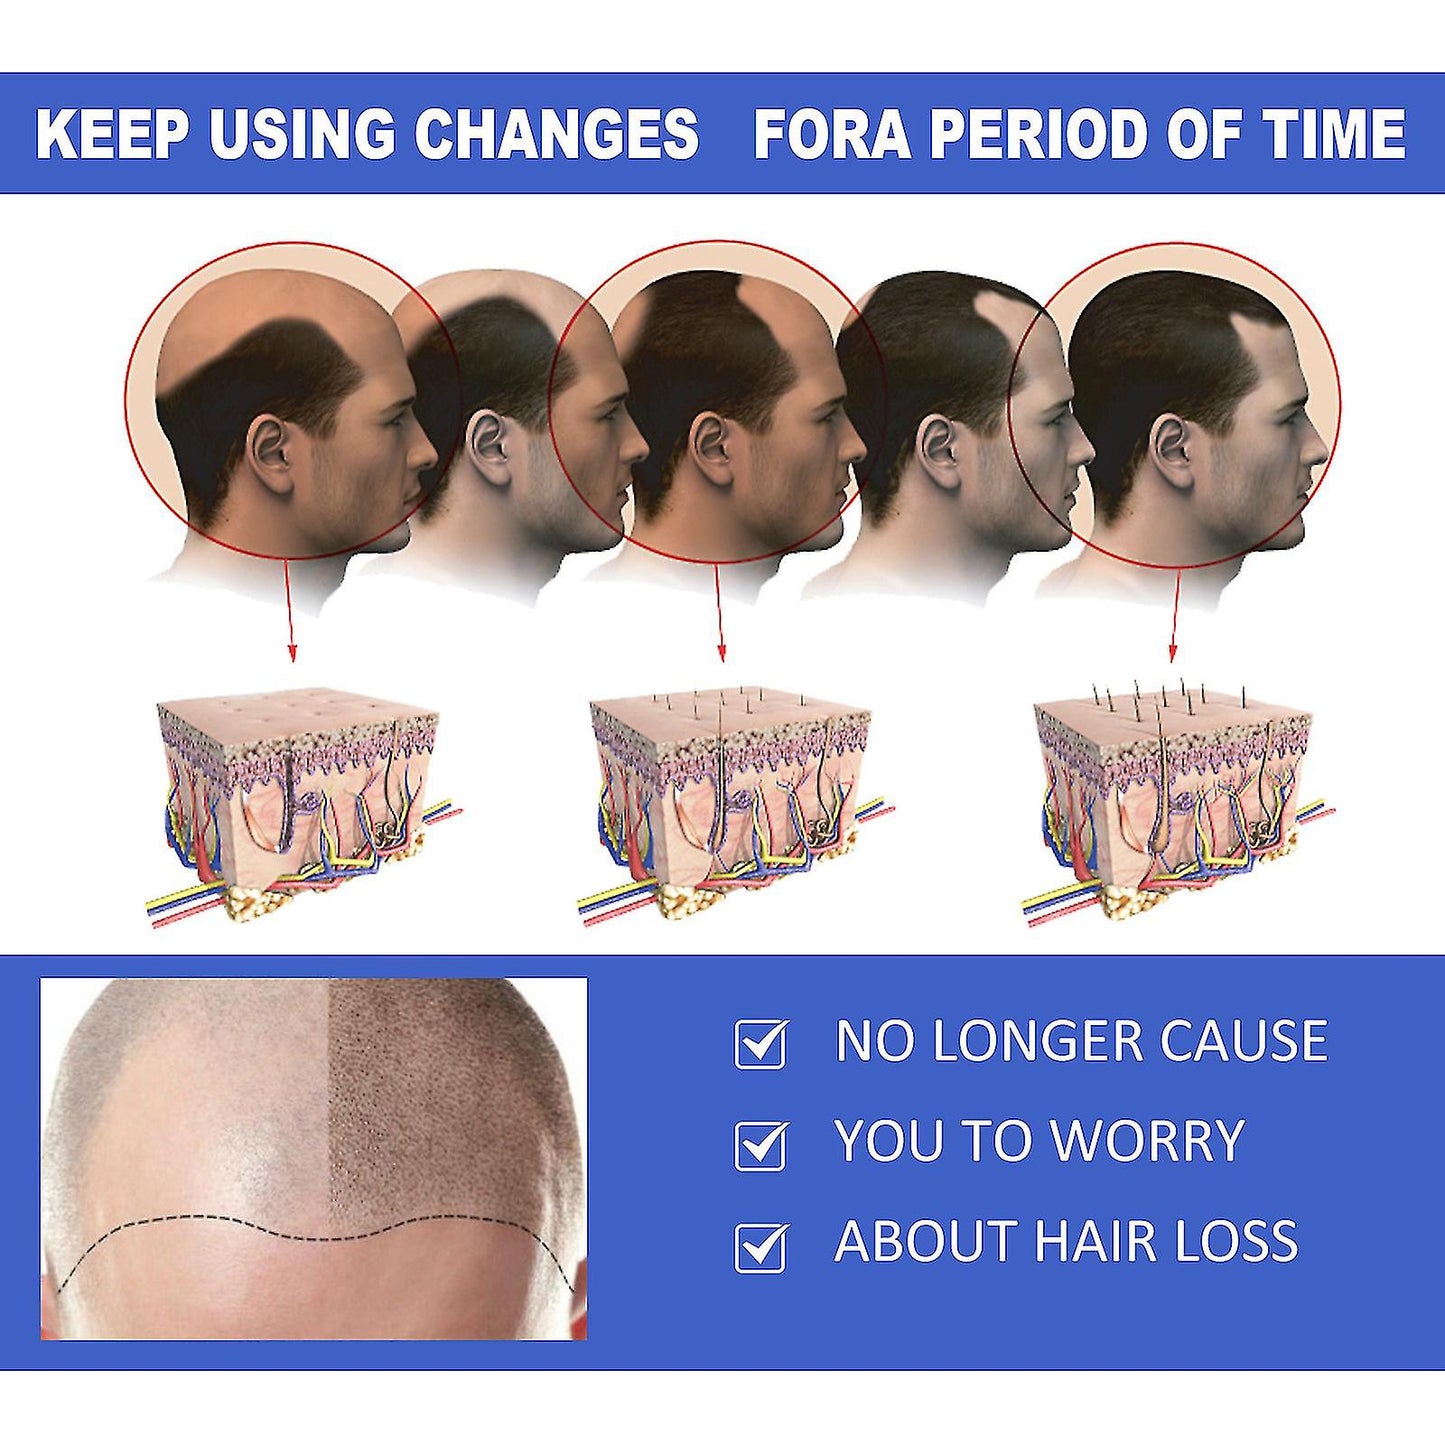 Ginger Hair Grower Spray Anti Hair Fall Hair Loss Treatment Hair Growth Essence Oil For Men